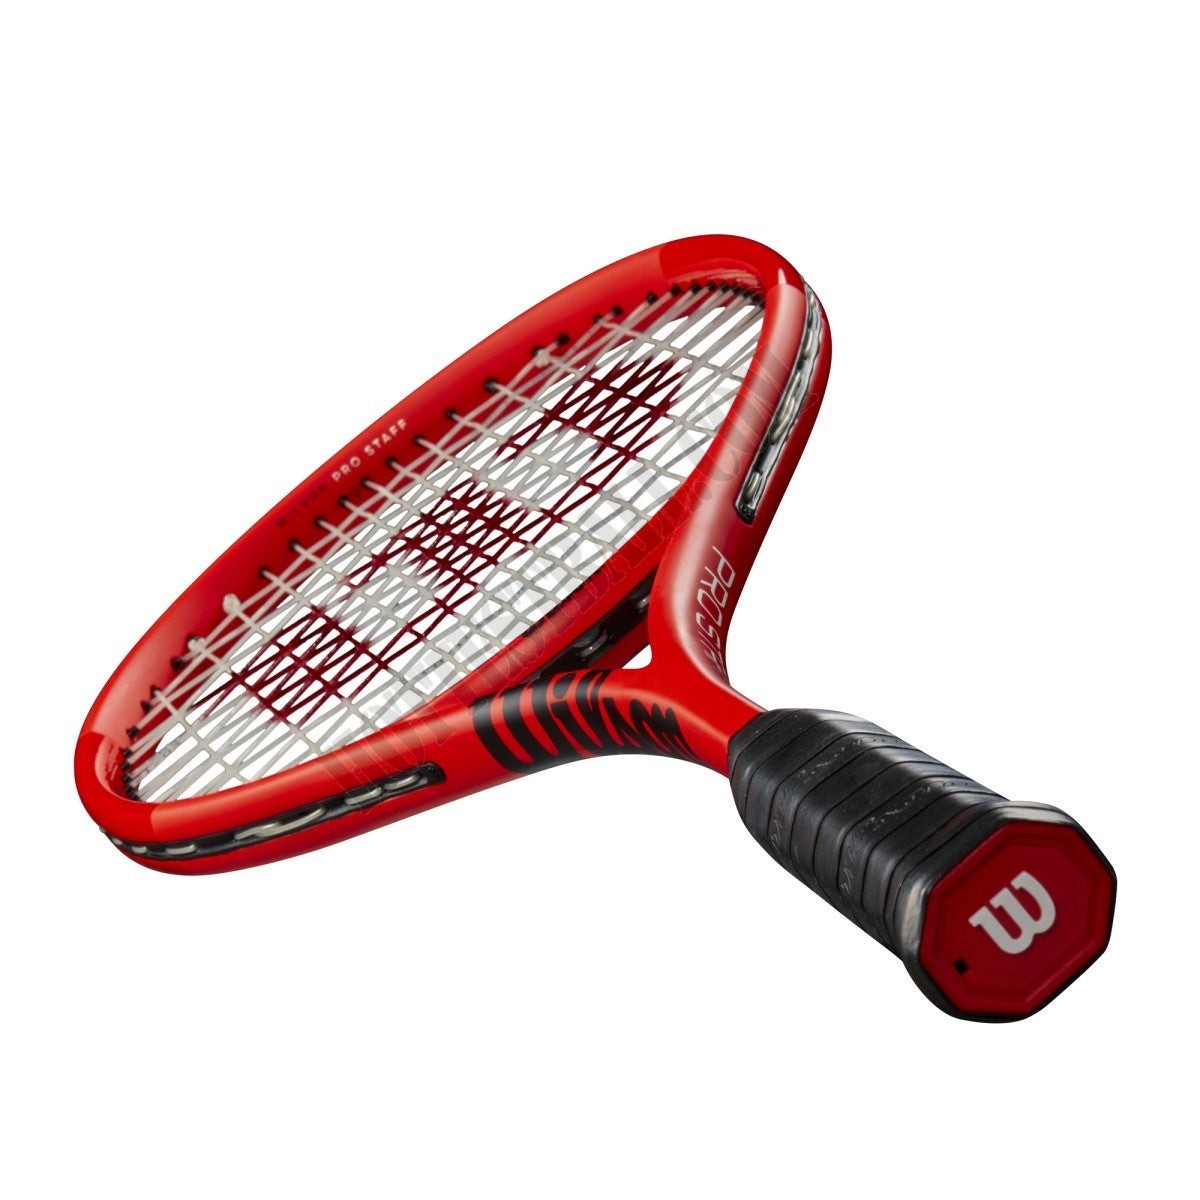 Pro Staff Ultra Light Squash Racquet - Wilson Discount Store - -2